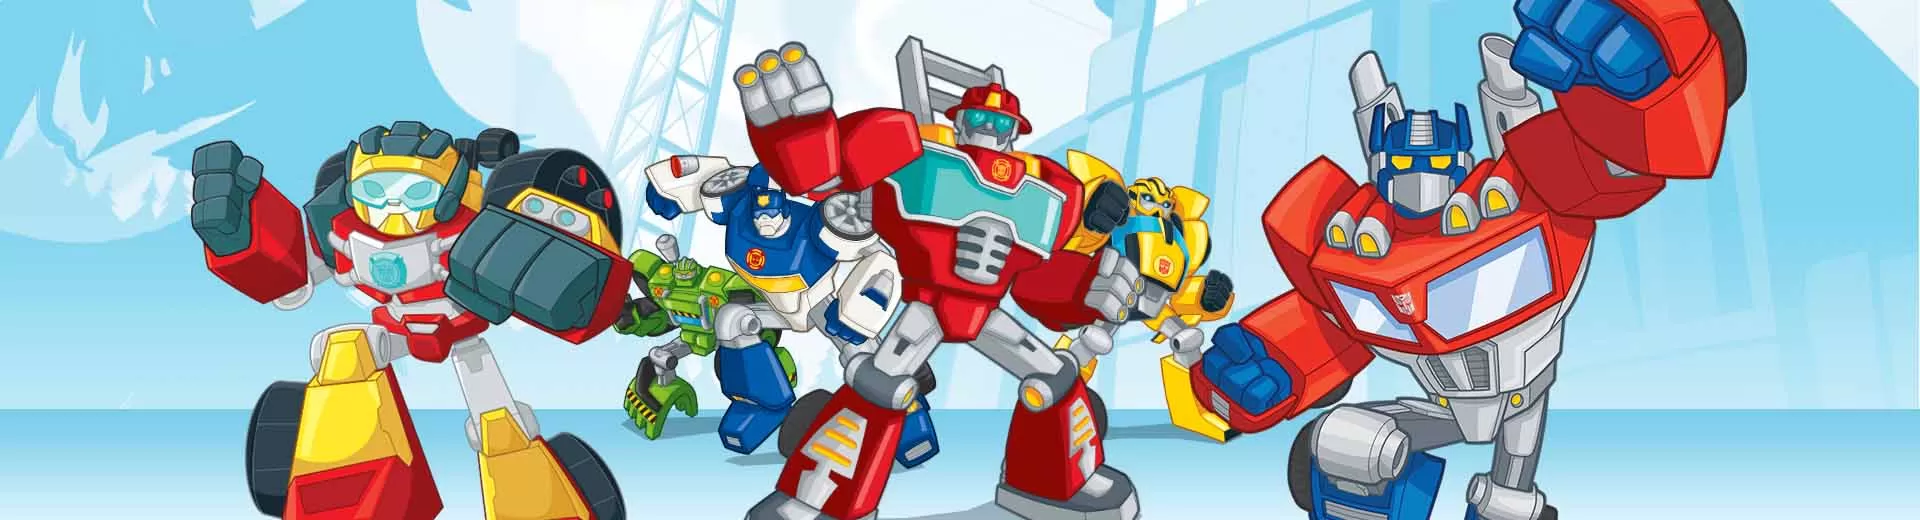 Transformers Rescue Bot Emulator Pc